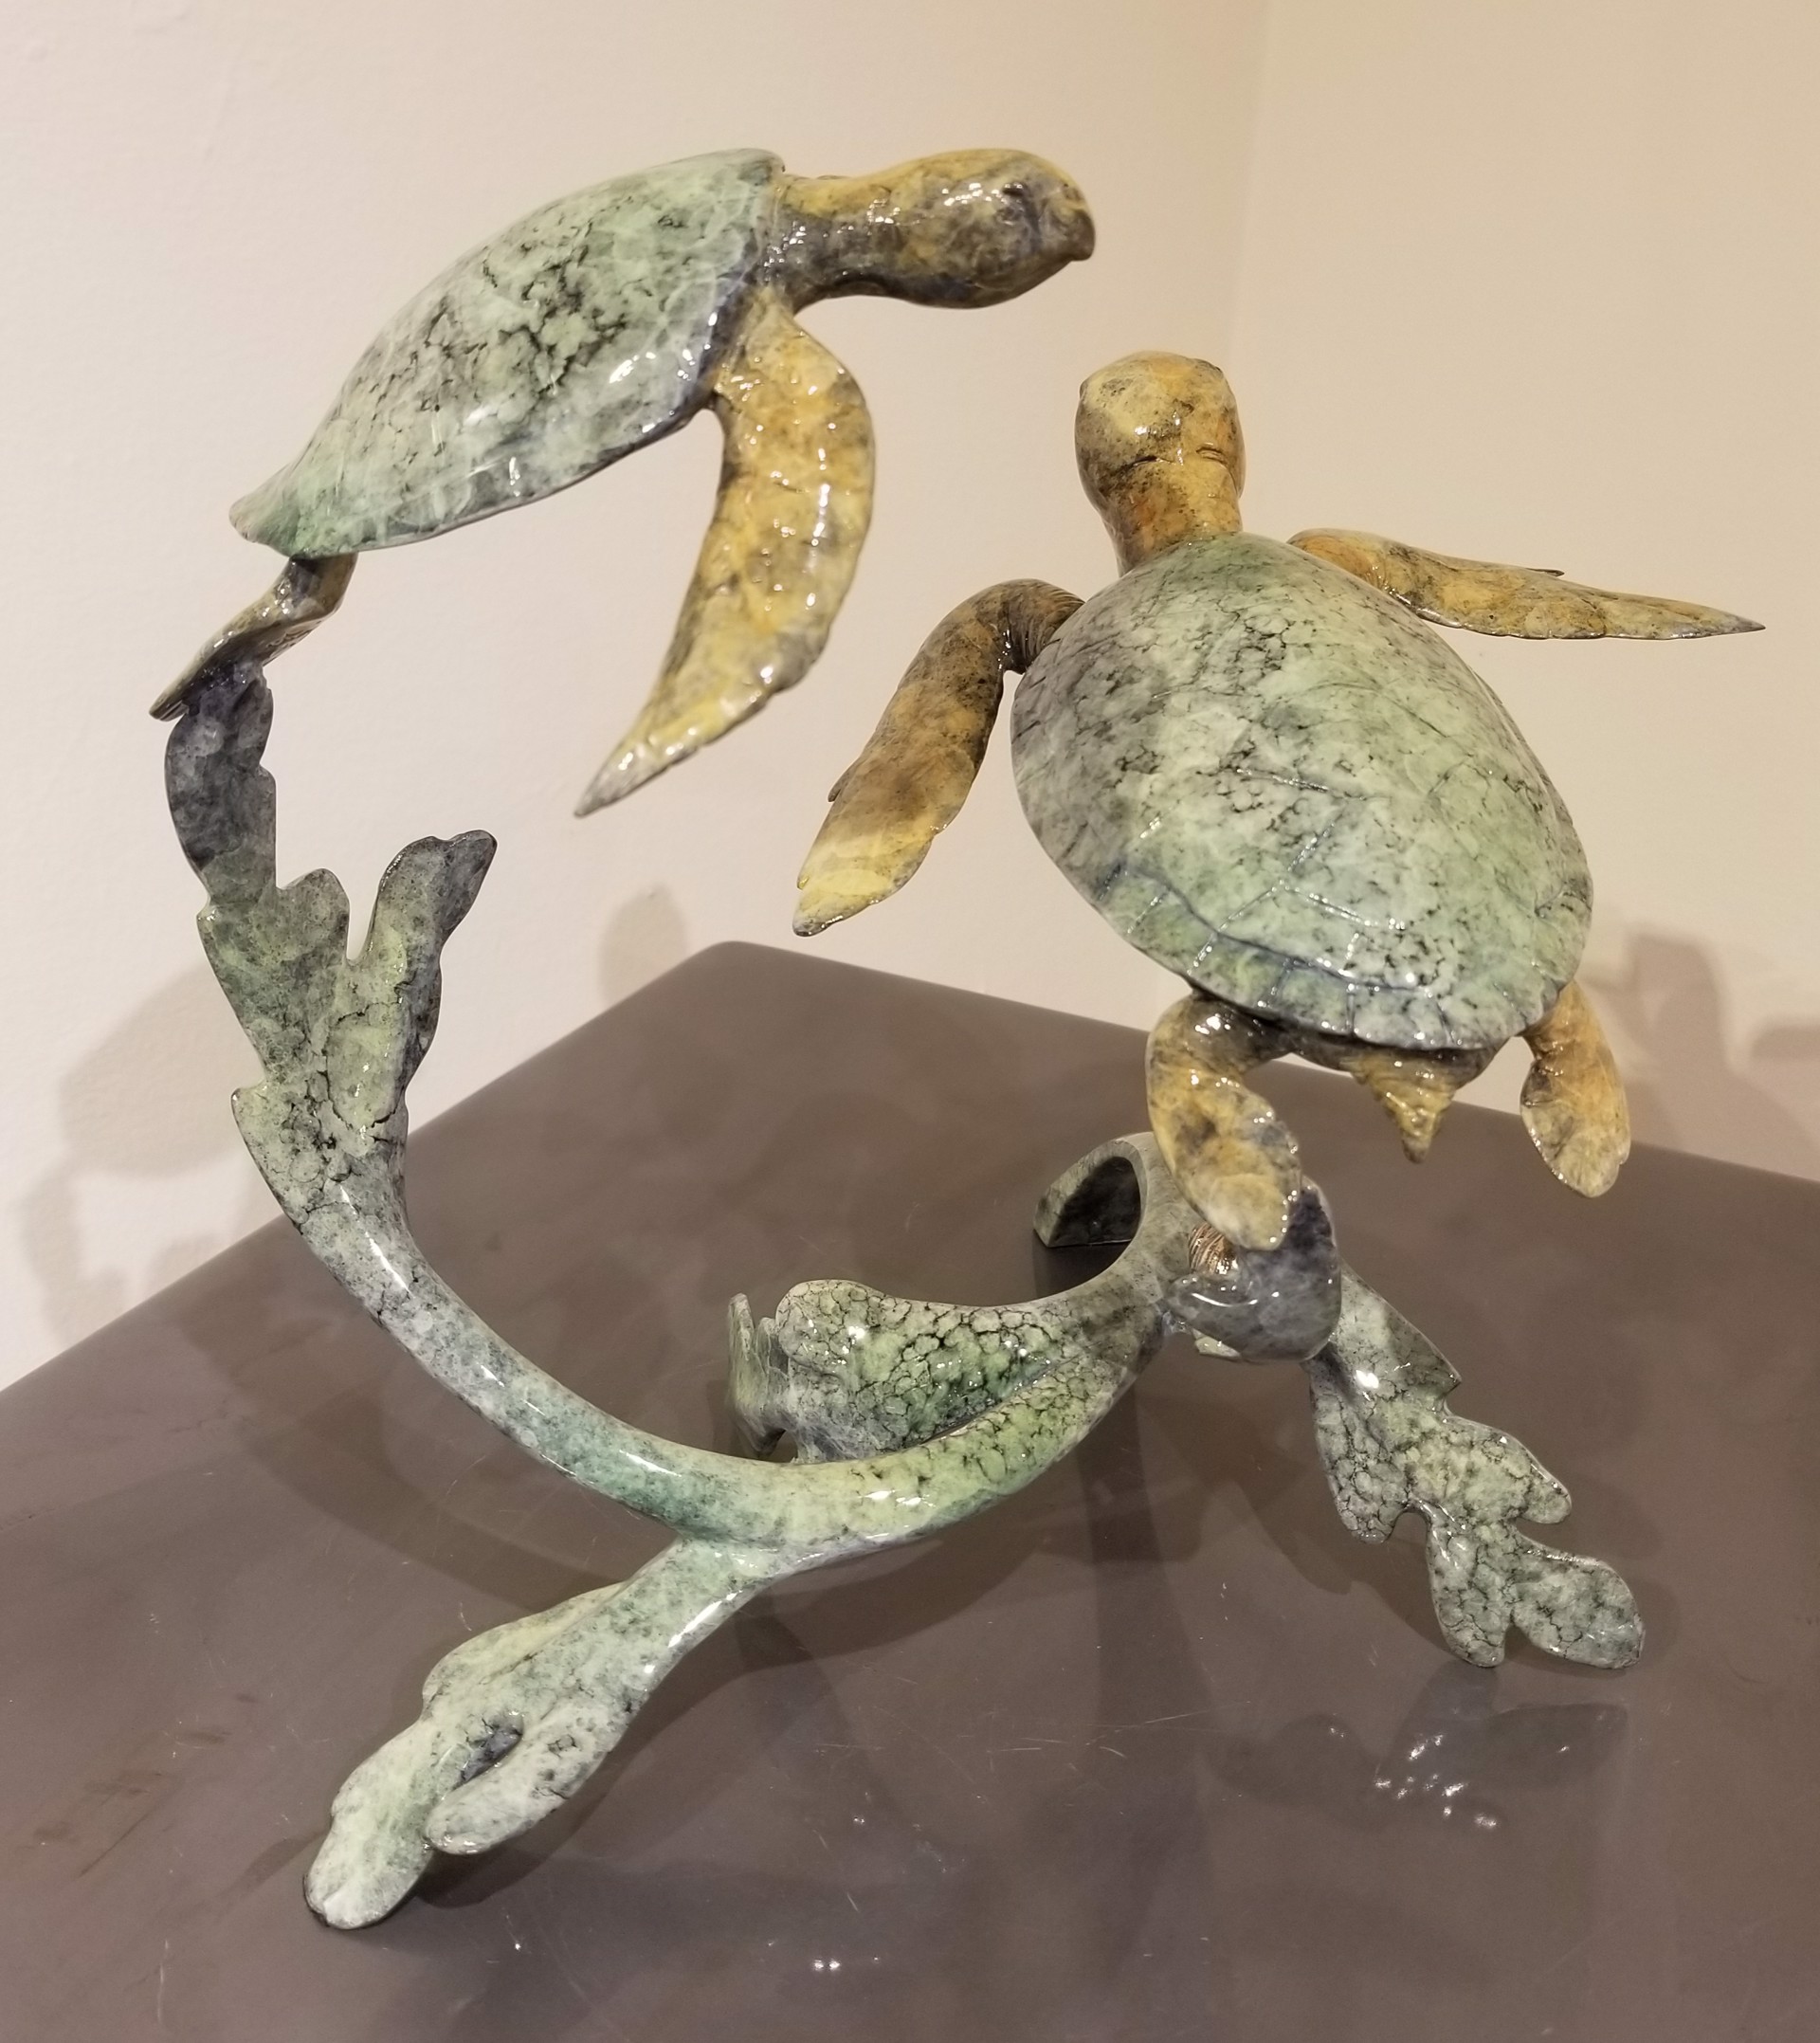 Small Sea Turtles by Brian Arthur (1935-2022)